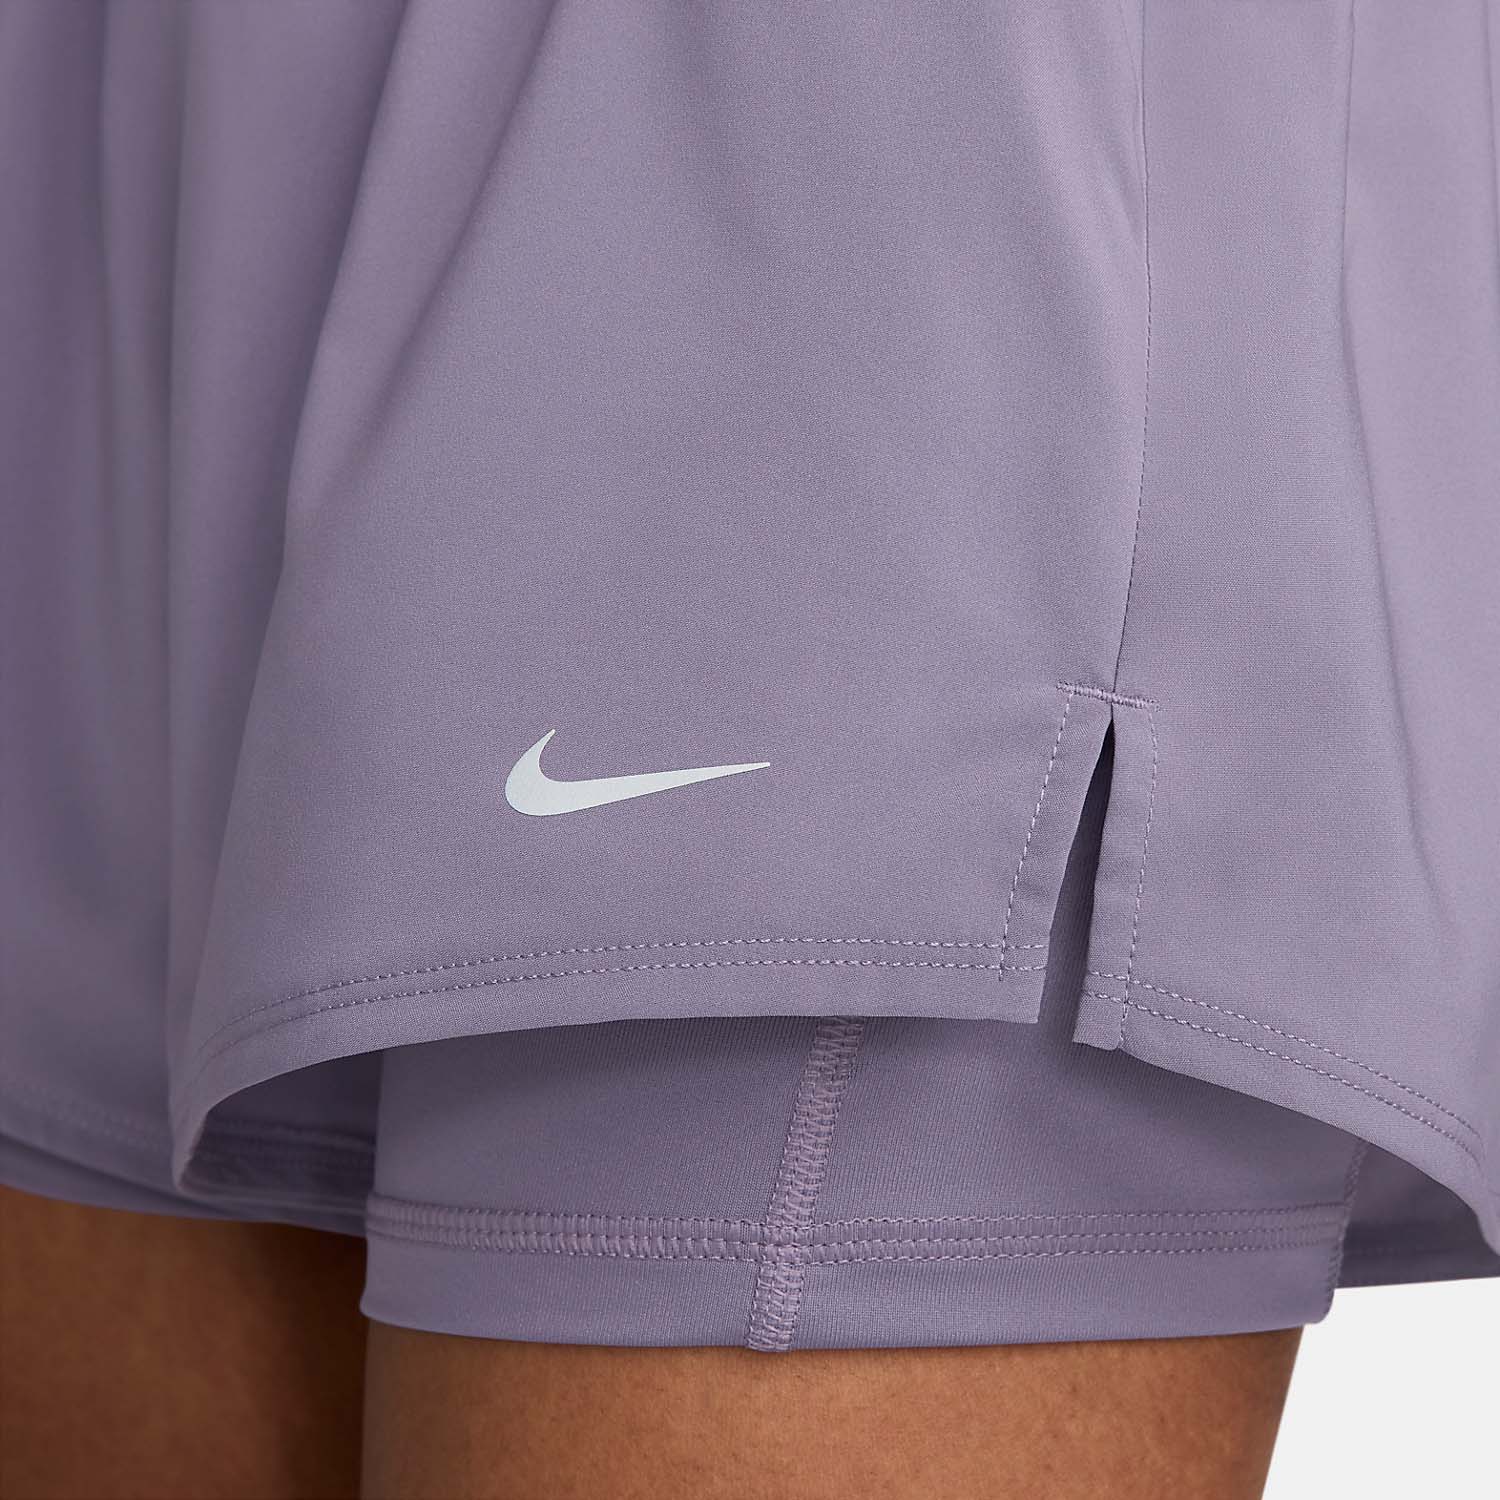 Nike One 2 in 1 3in Shorts - Daybreak/Reflective Silver